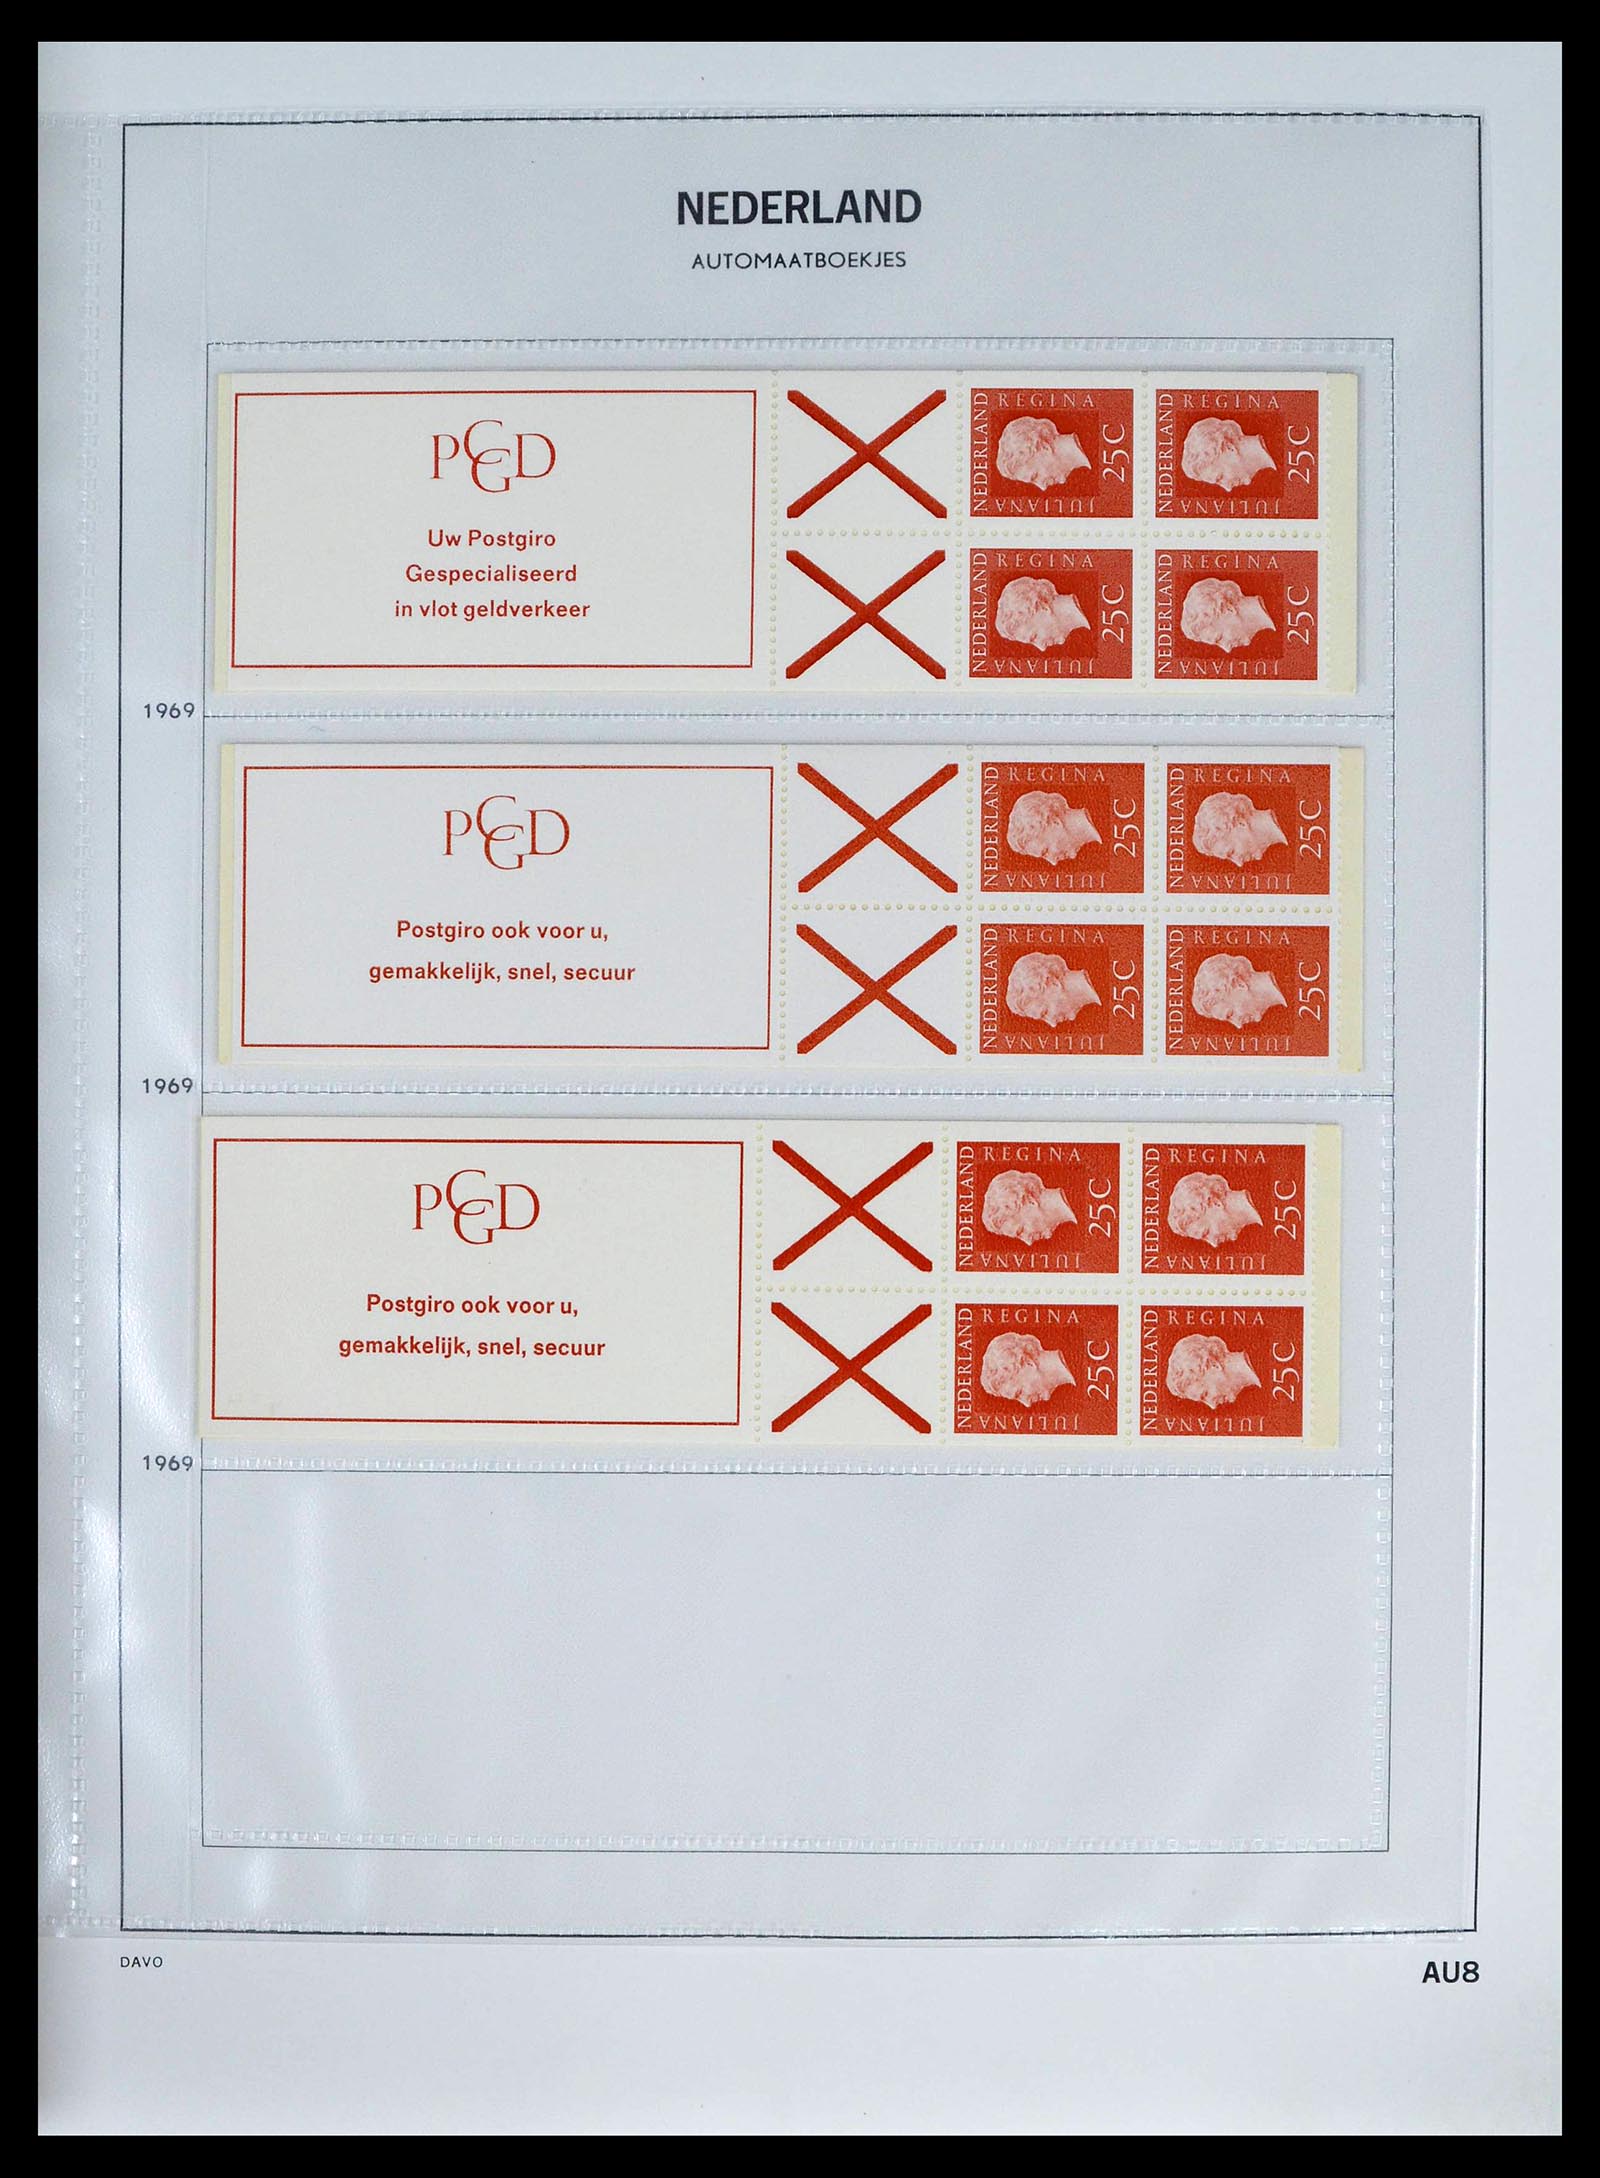 39362 0008 - Stamp collection 39362 Netherlands stamp booklets 1964-2003.